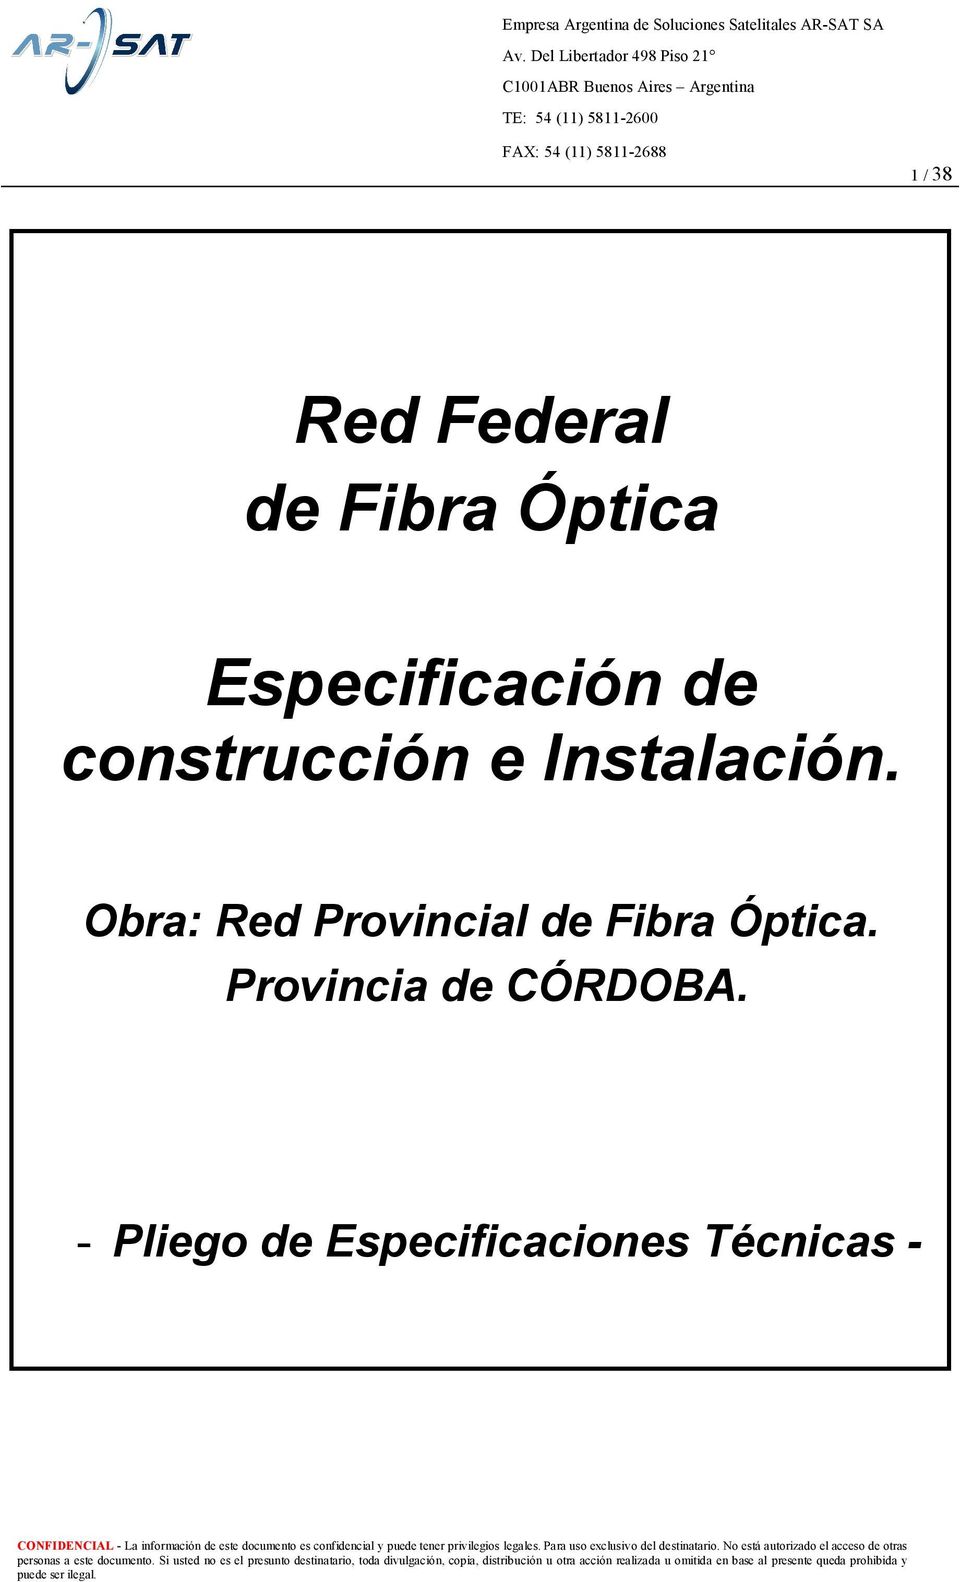 Obra: Red Provincial de Fibra Óptica.